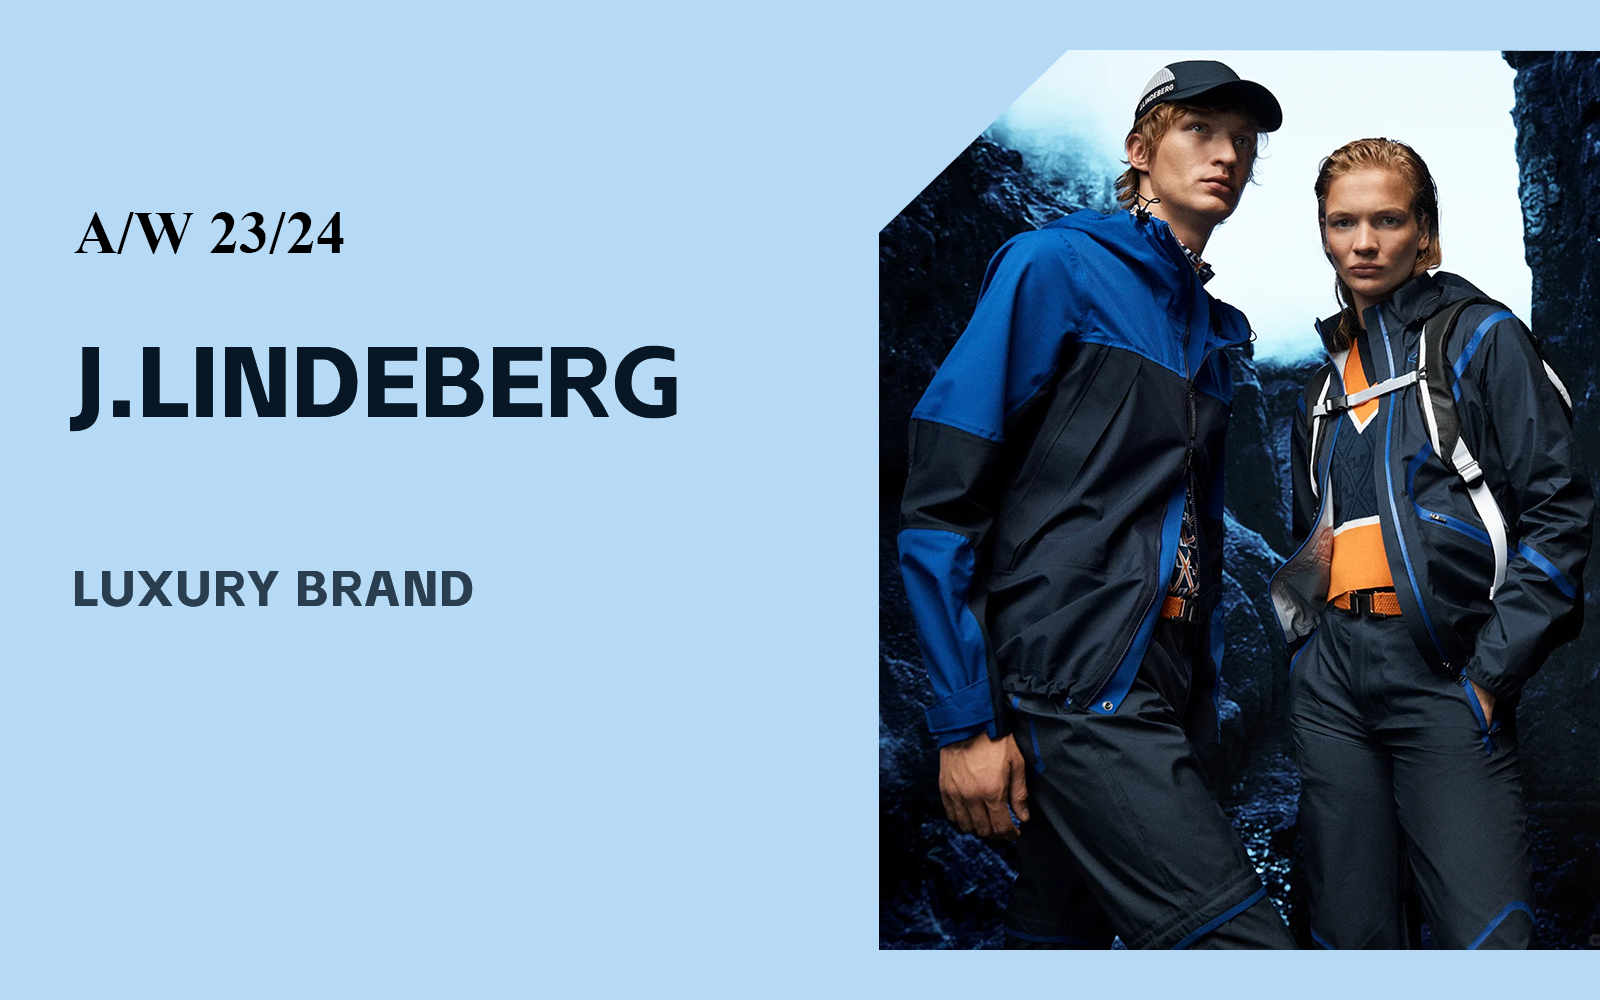 Vivid Imagination -- The Analysis of J. LINDEBERG The Luxury Sportswear Brand